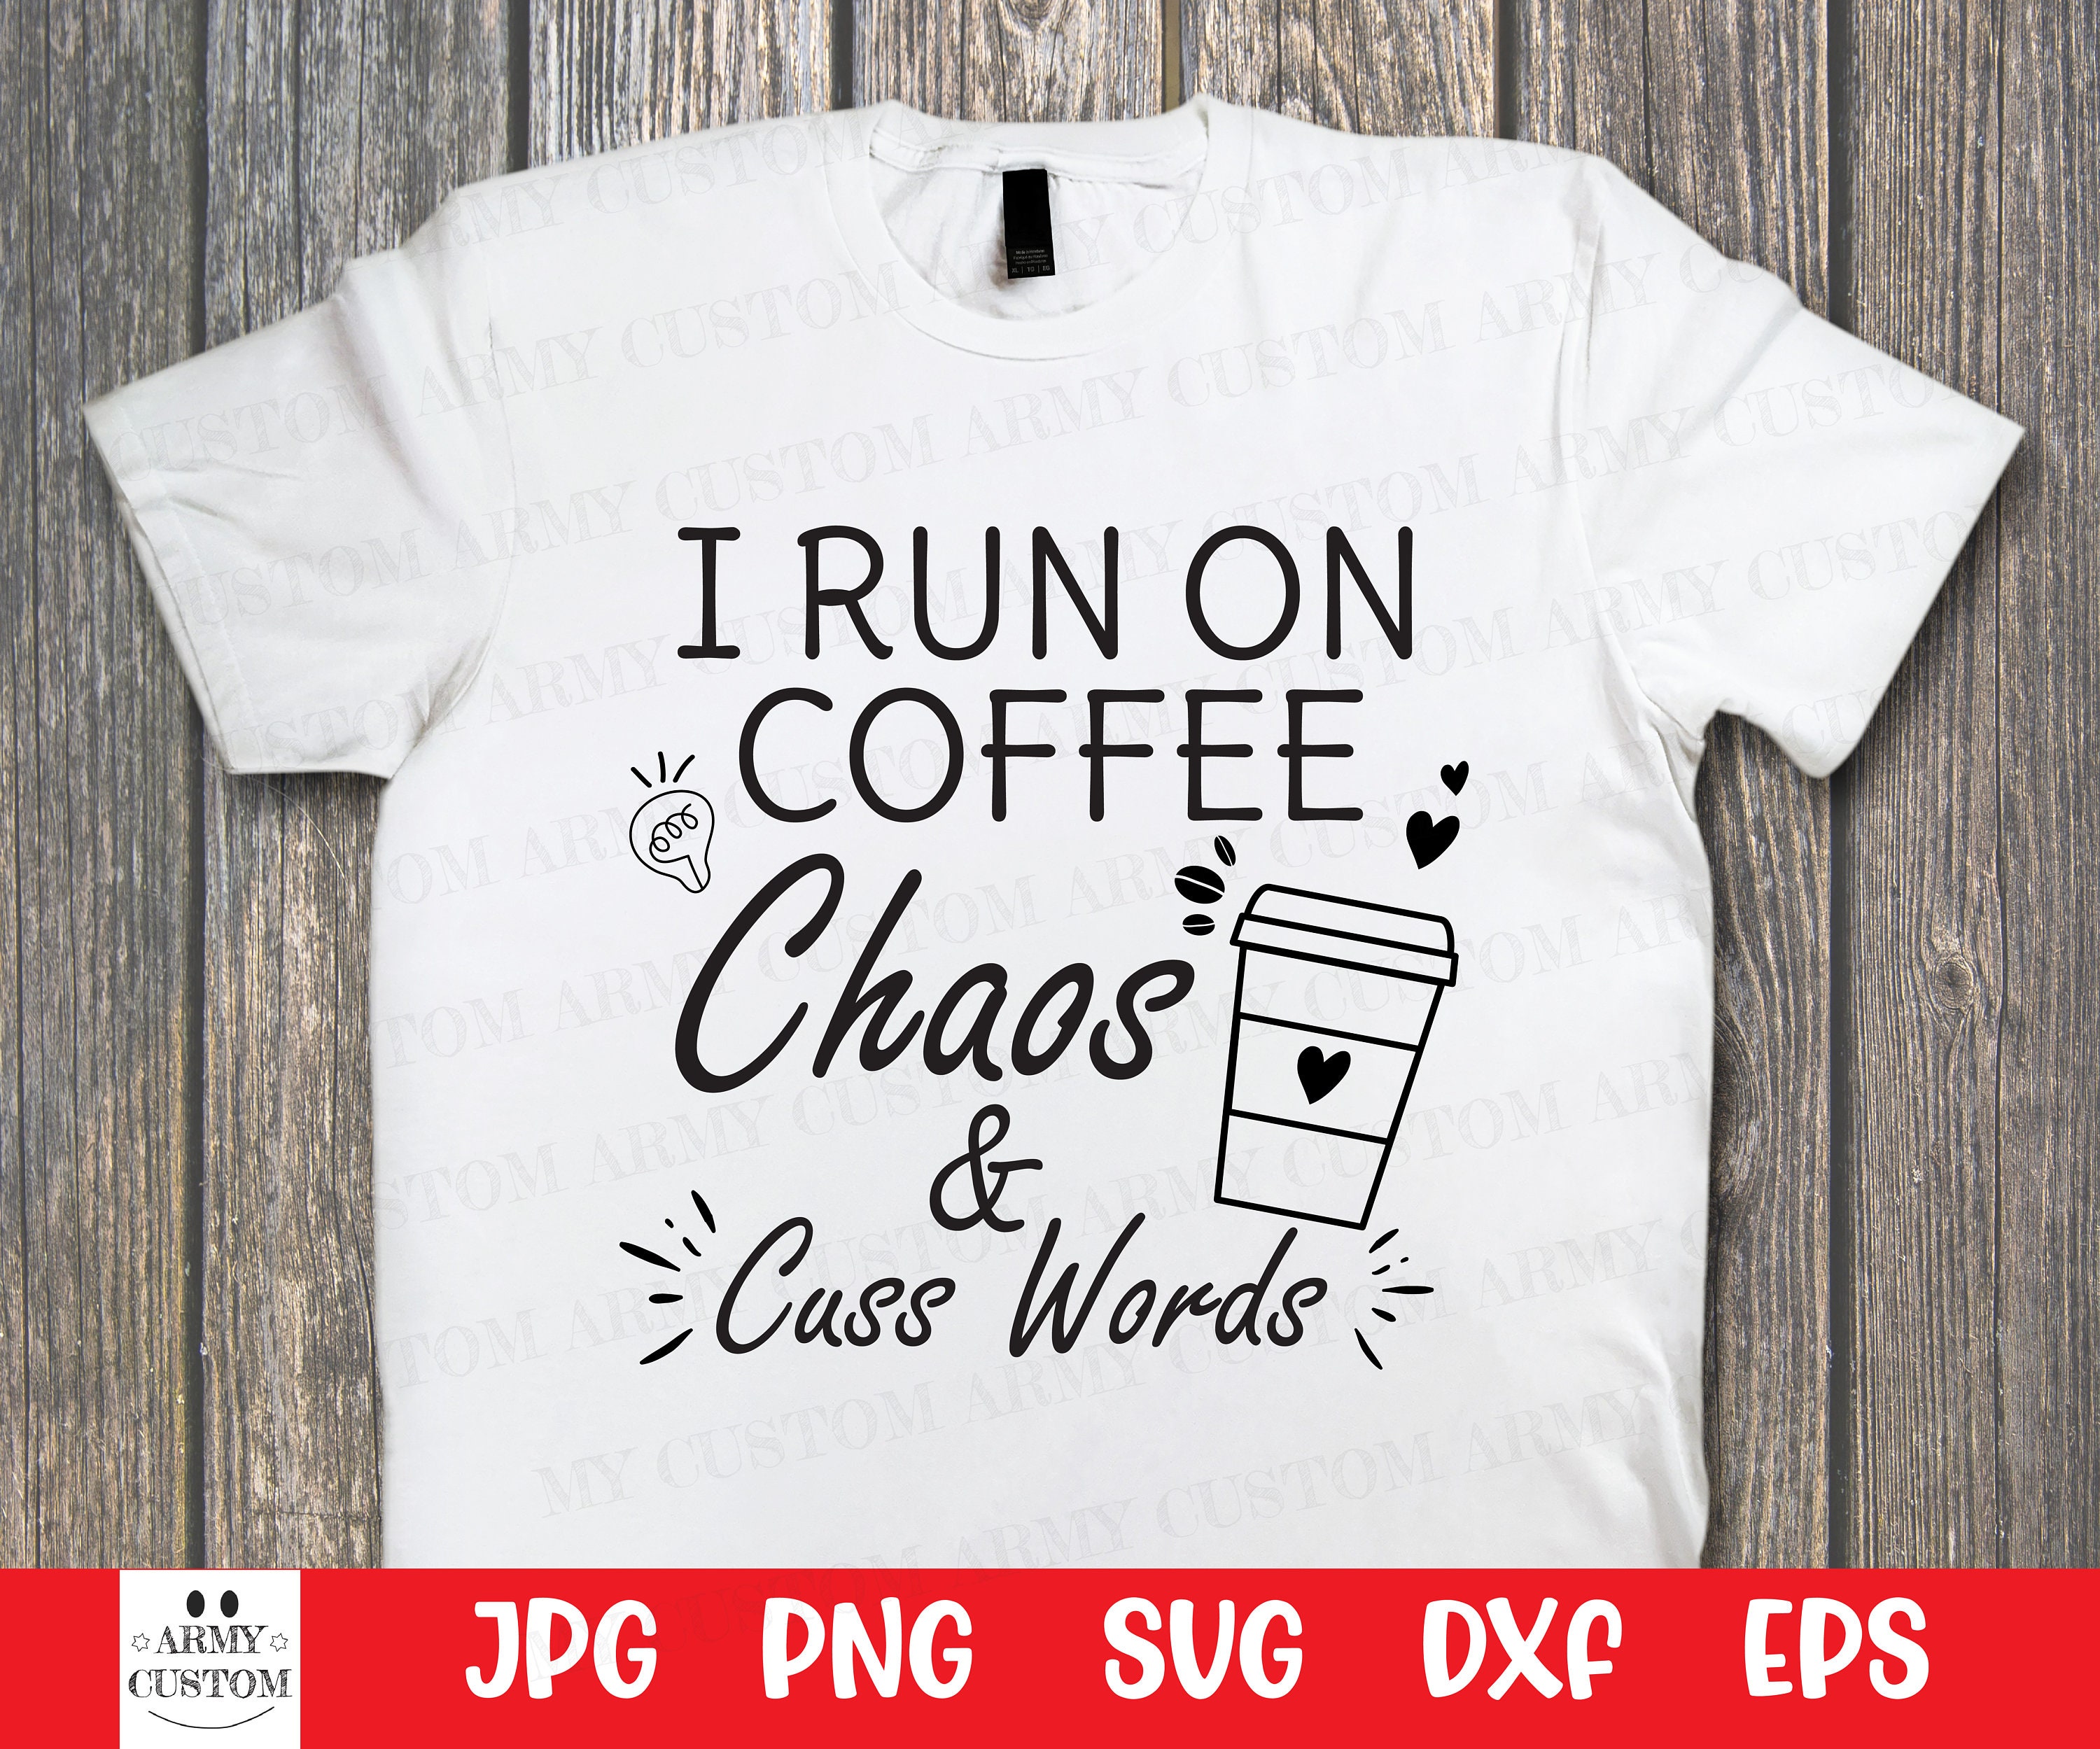 I Run On Coffee Chaos & Cuss Words SVG EPS JPG png dxf cut | Etsy